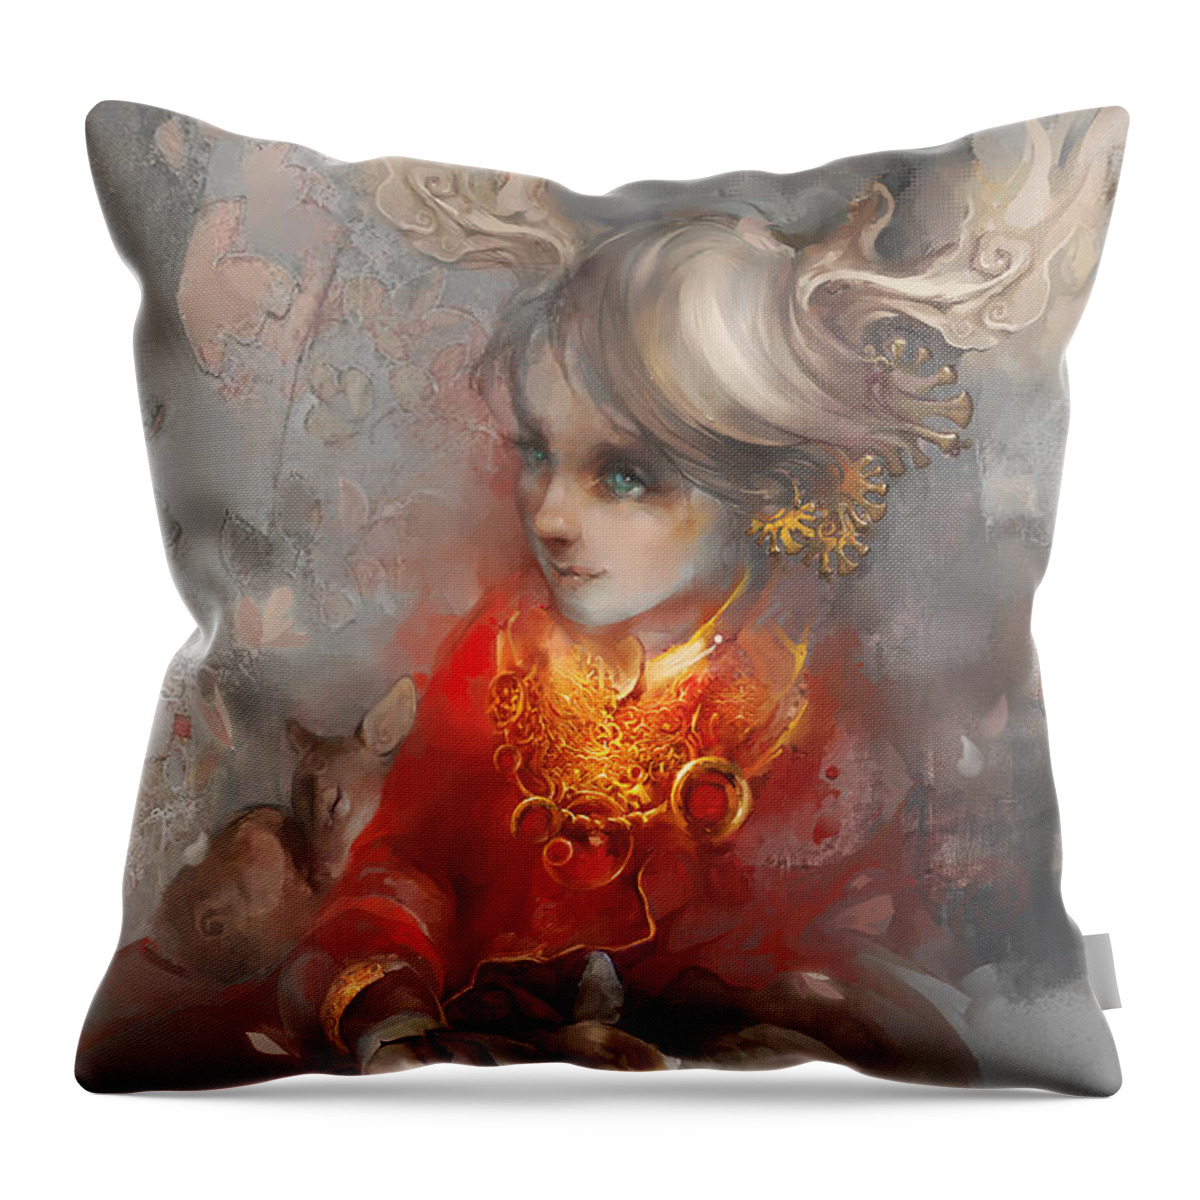 Portrait Throw Pillow featuring the digital art Deer Princess by Te Hu